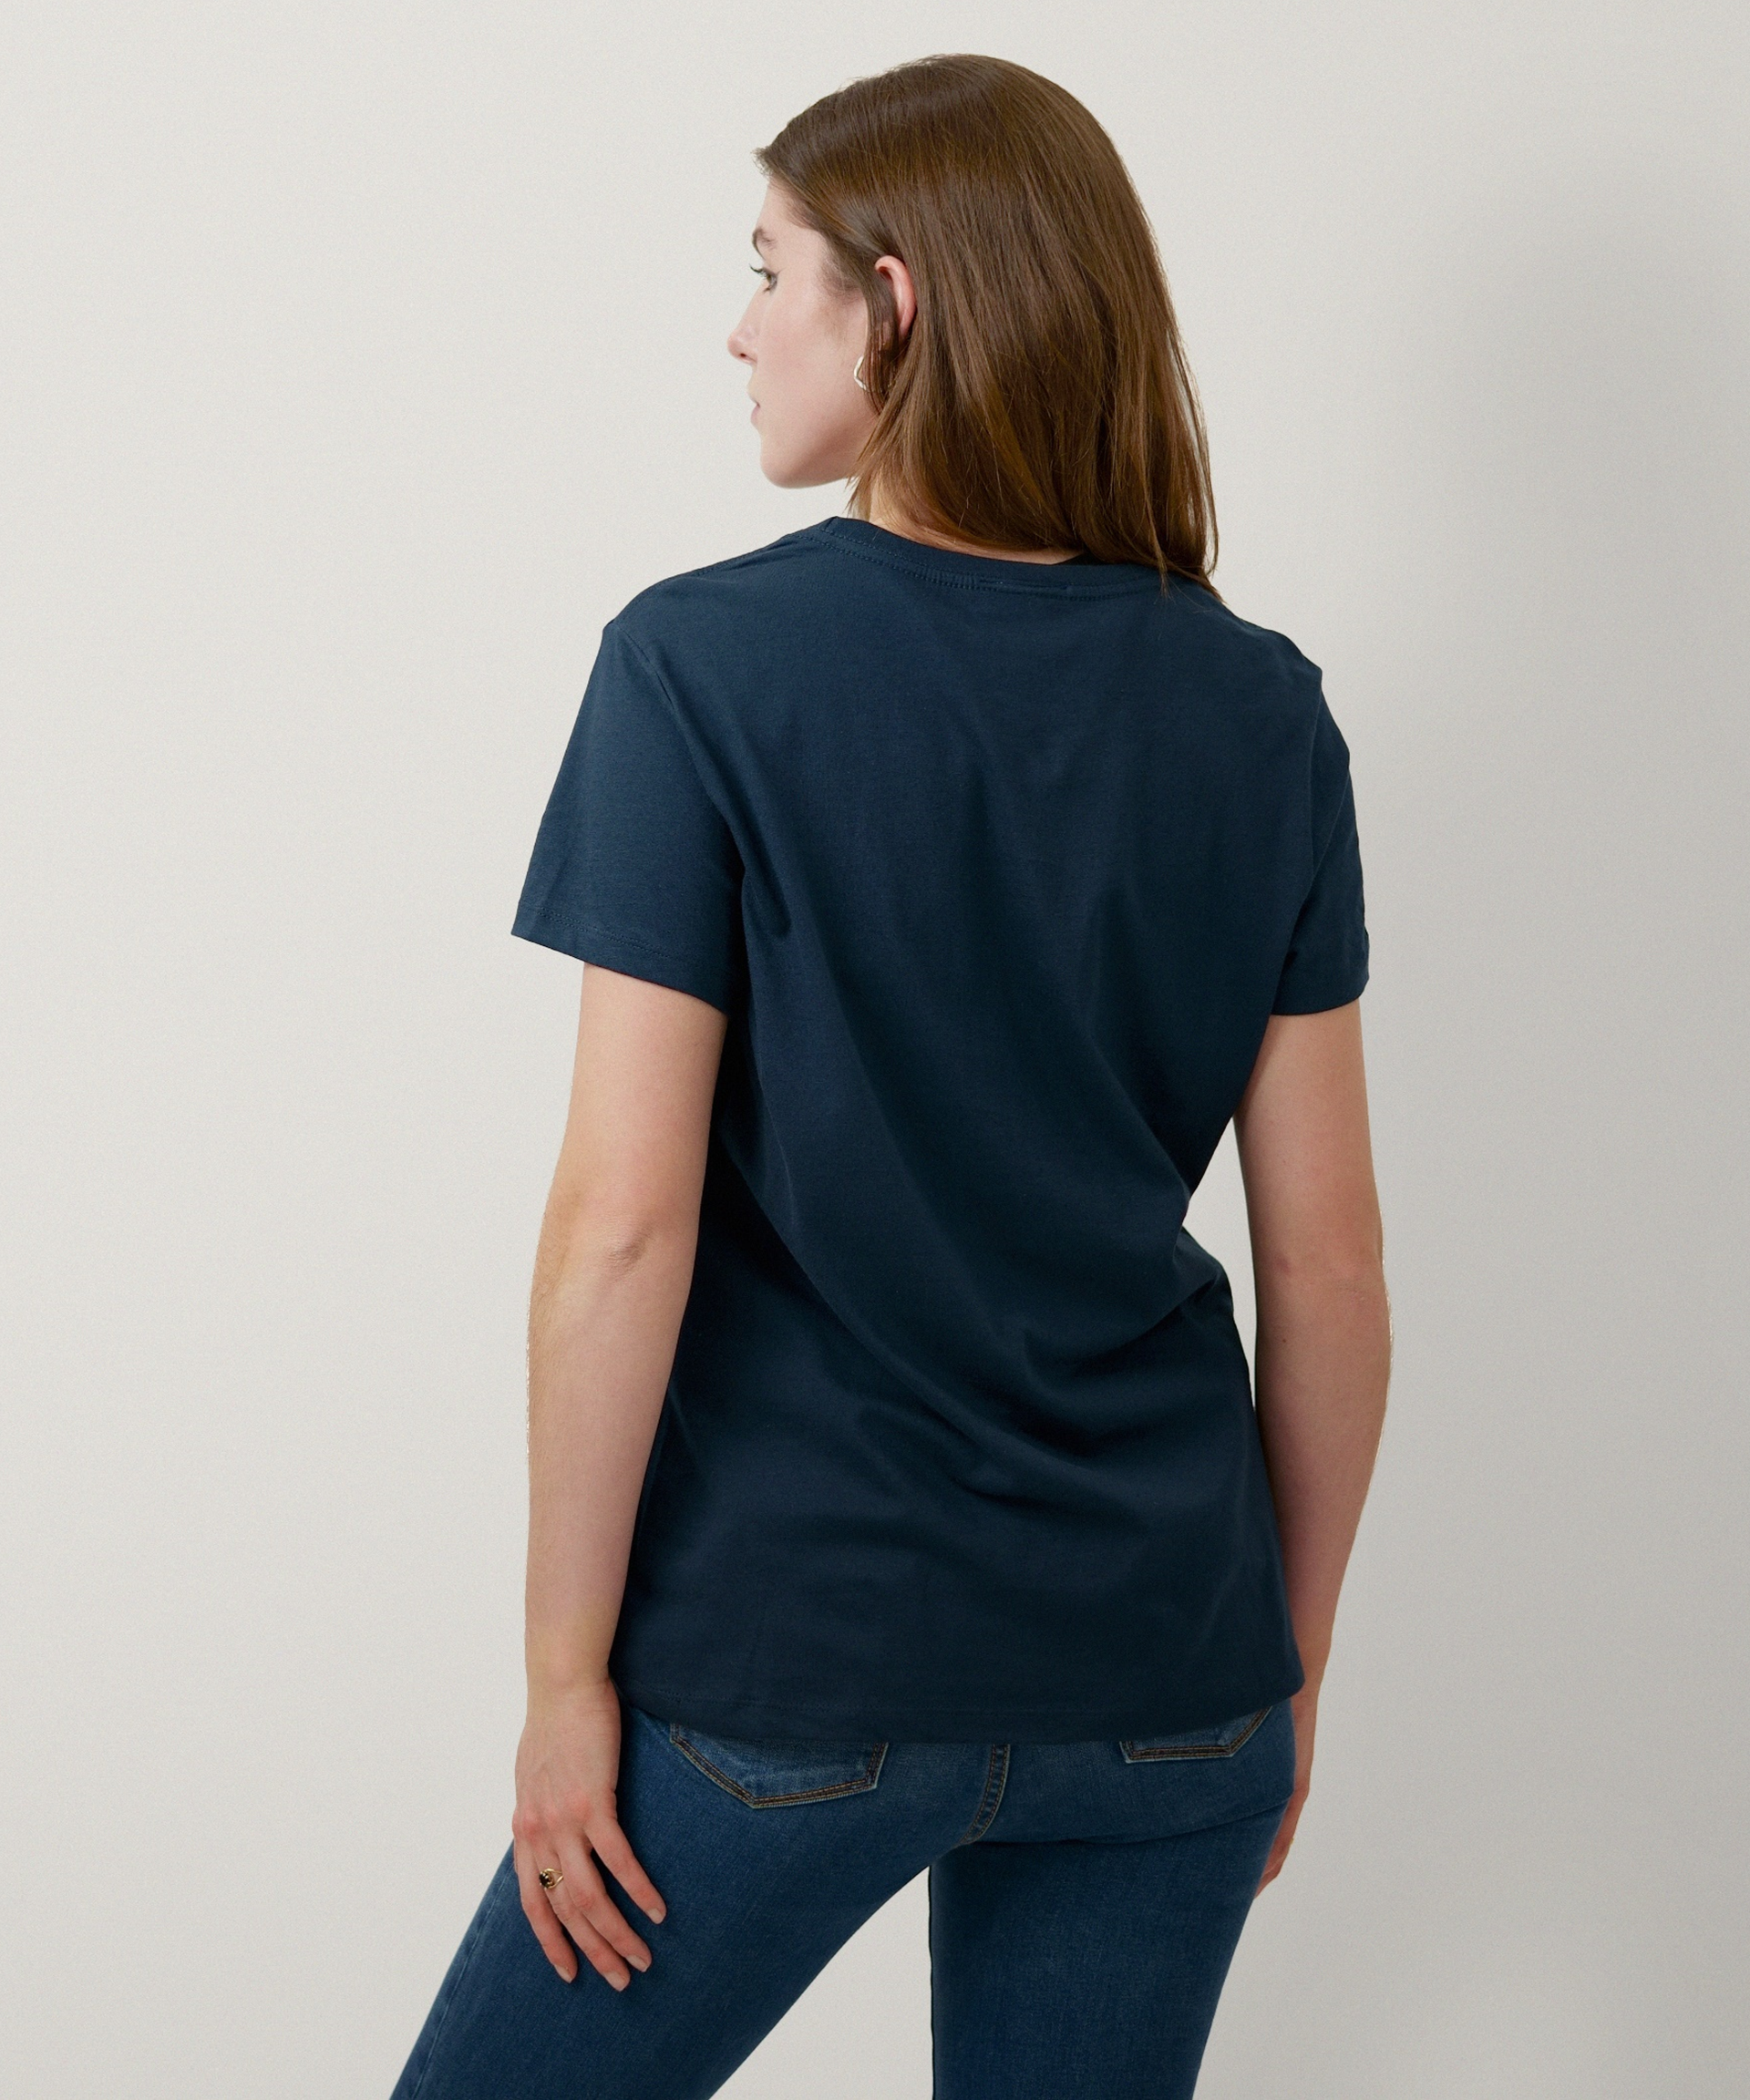 Essential Short Sleeve T-Shirt for Women (New Navy)